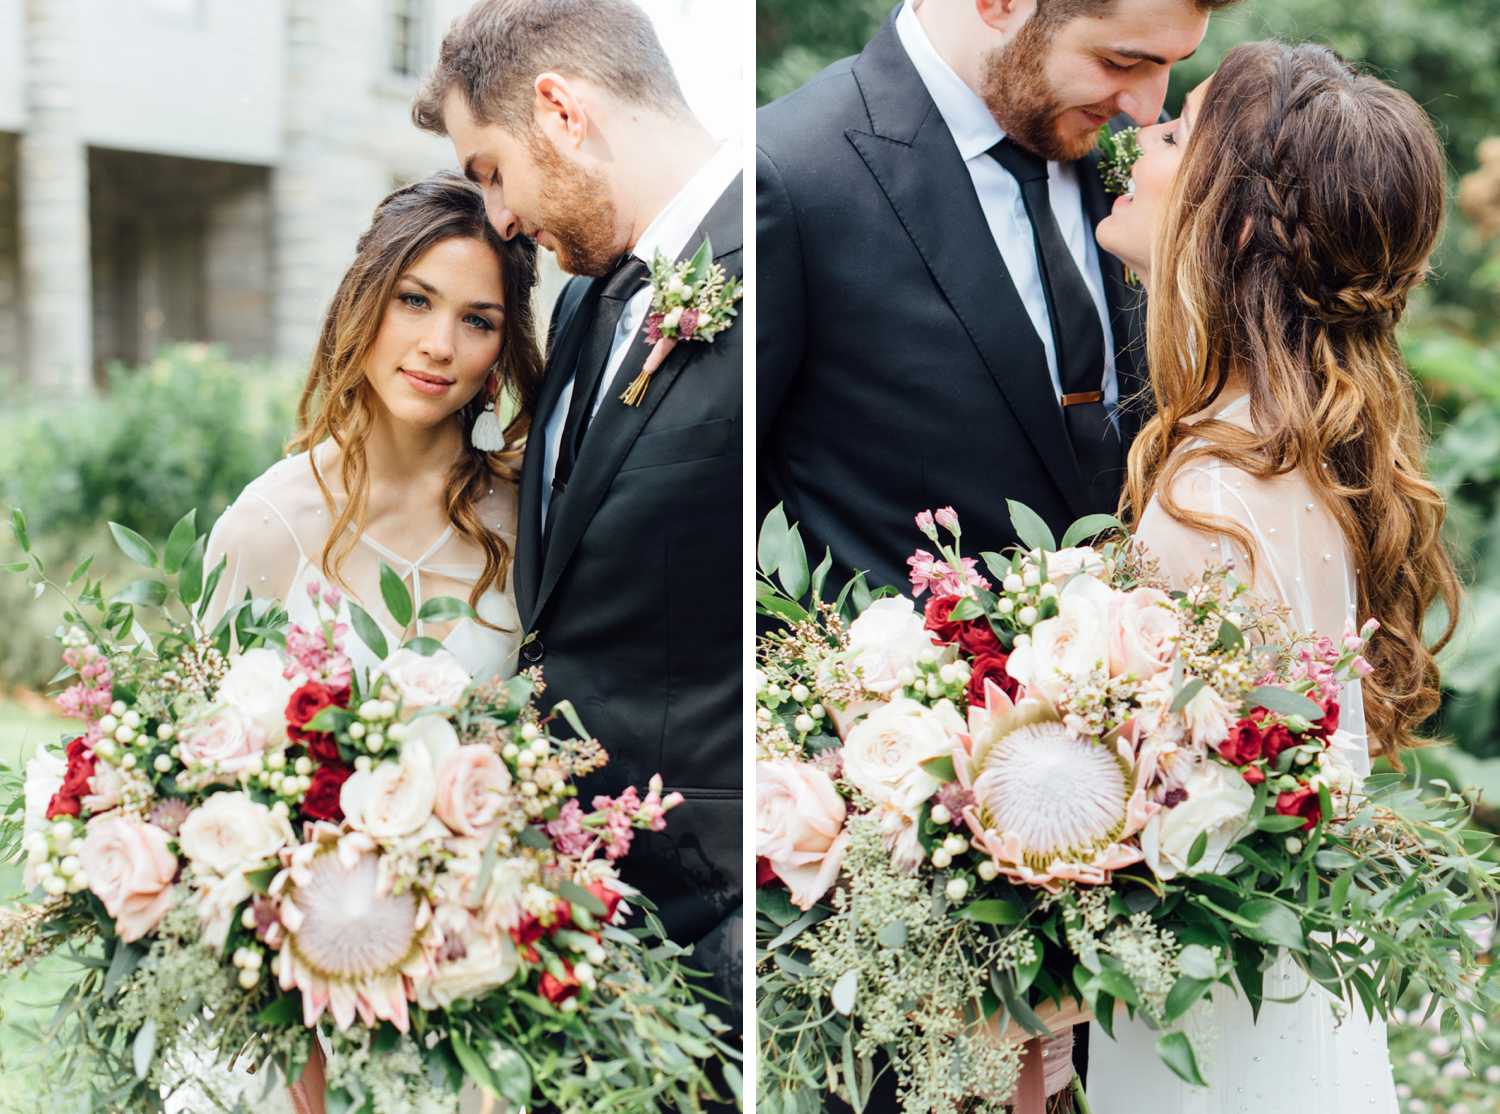 Emma + Peter - Bartram's Garden Wedding - Philadelphia Wedding Photographer - Alison Dunn Photography photo